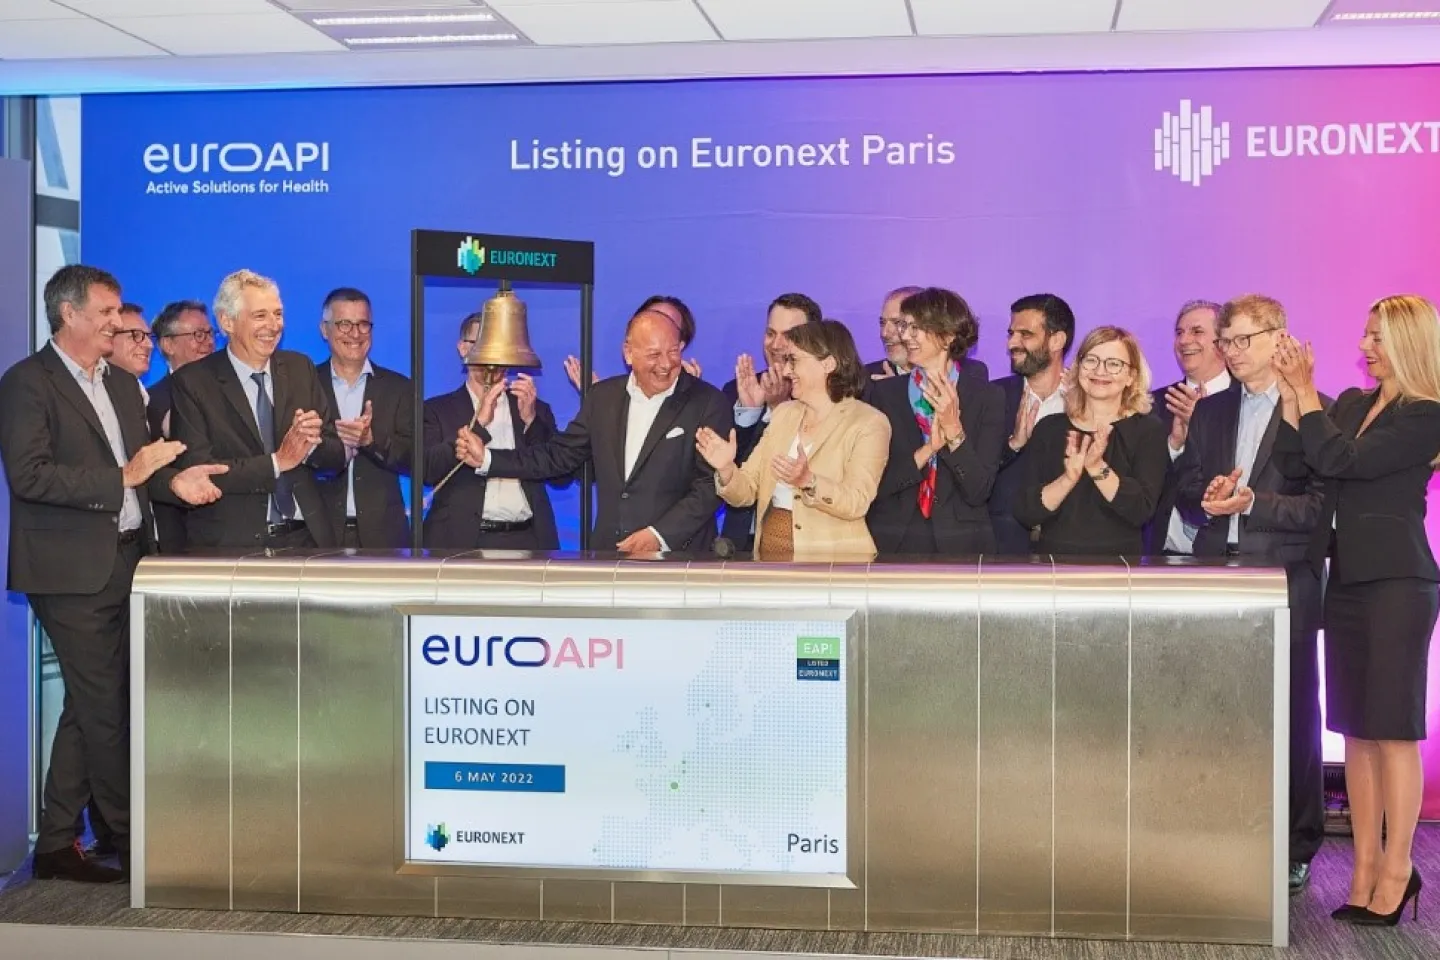 EUROAPI lists on Euronext Paris